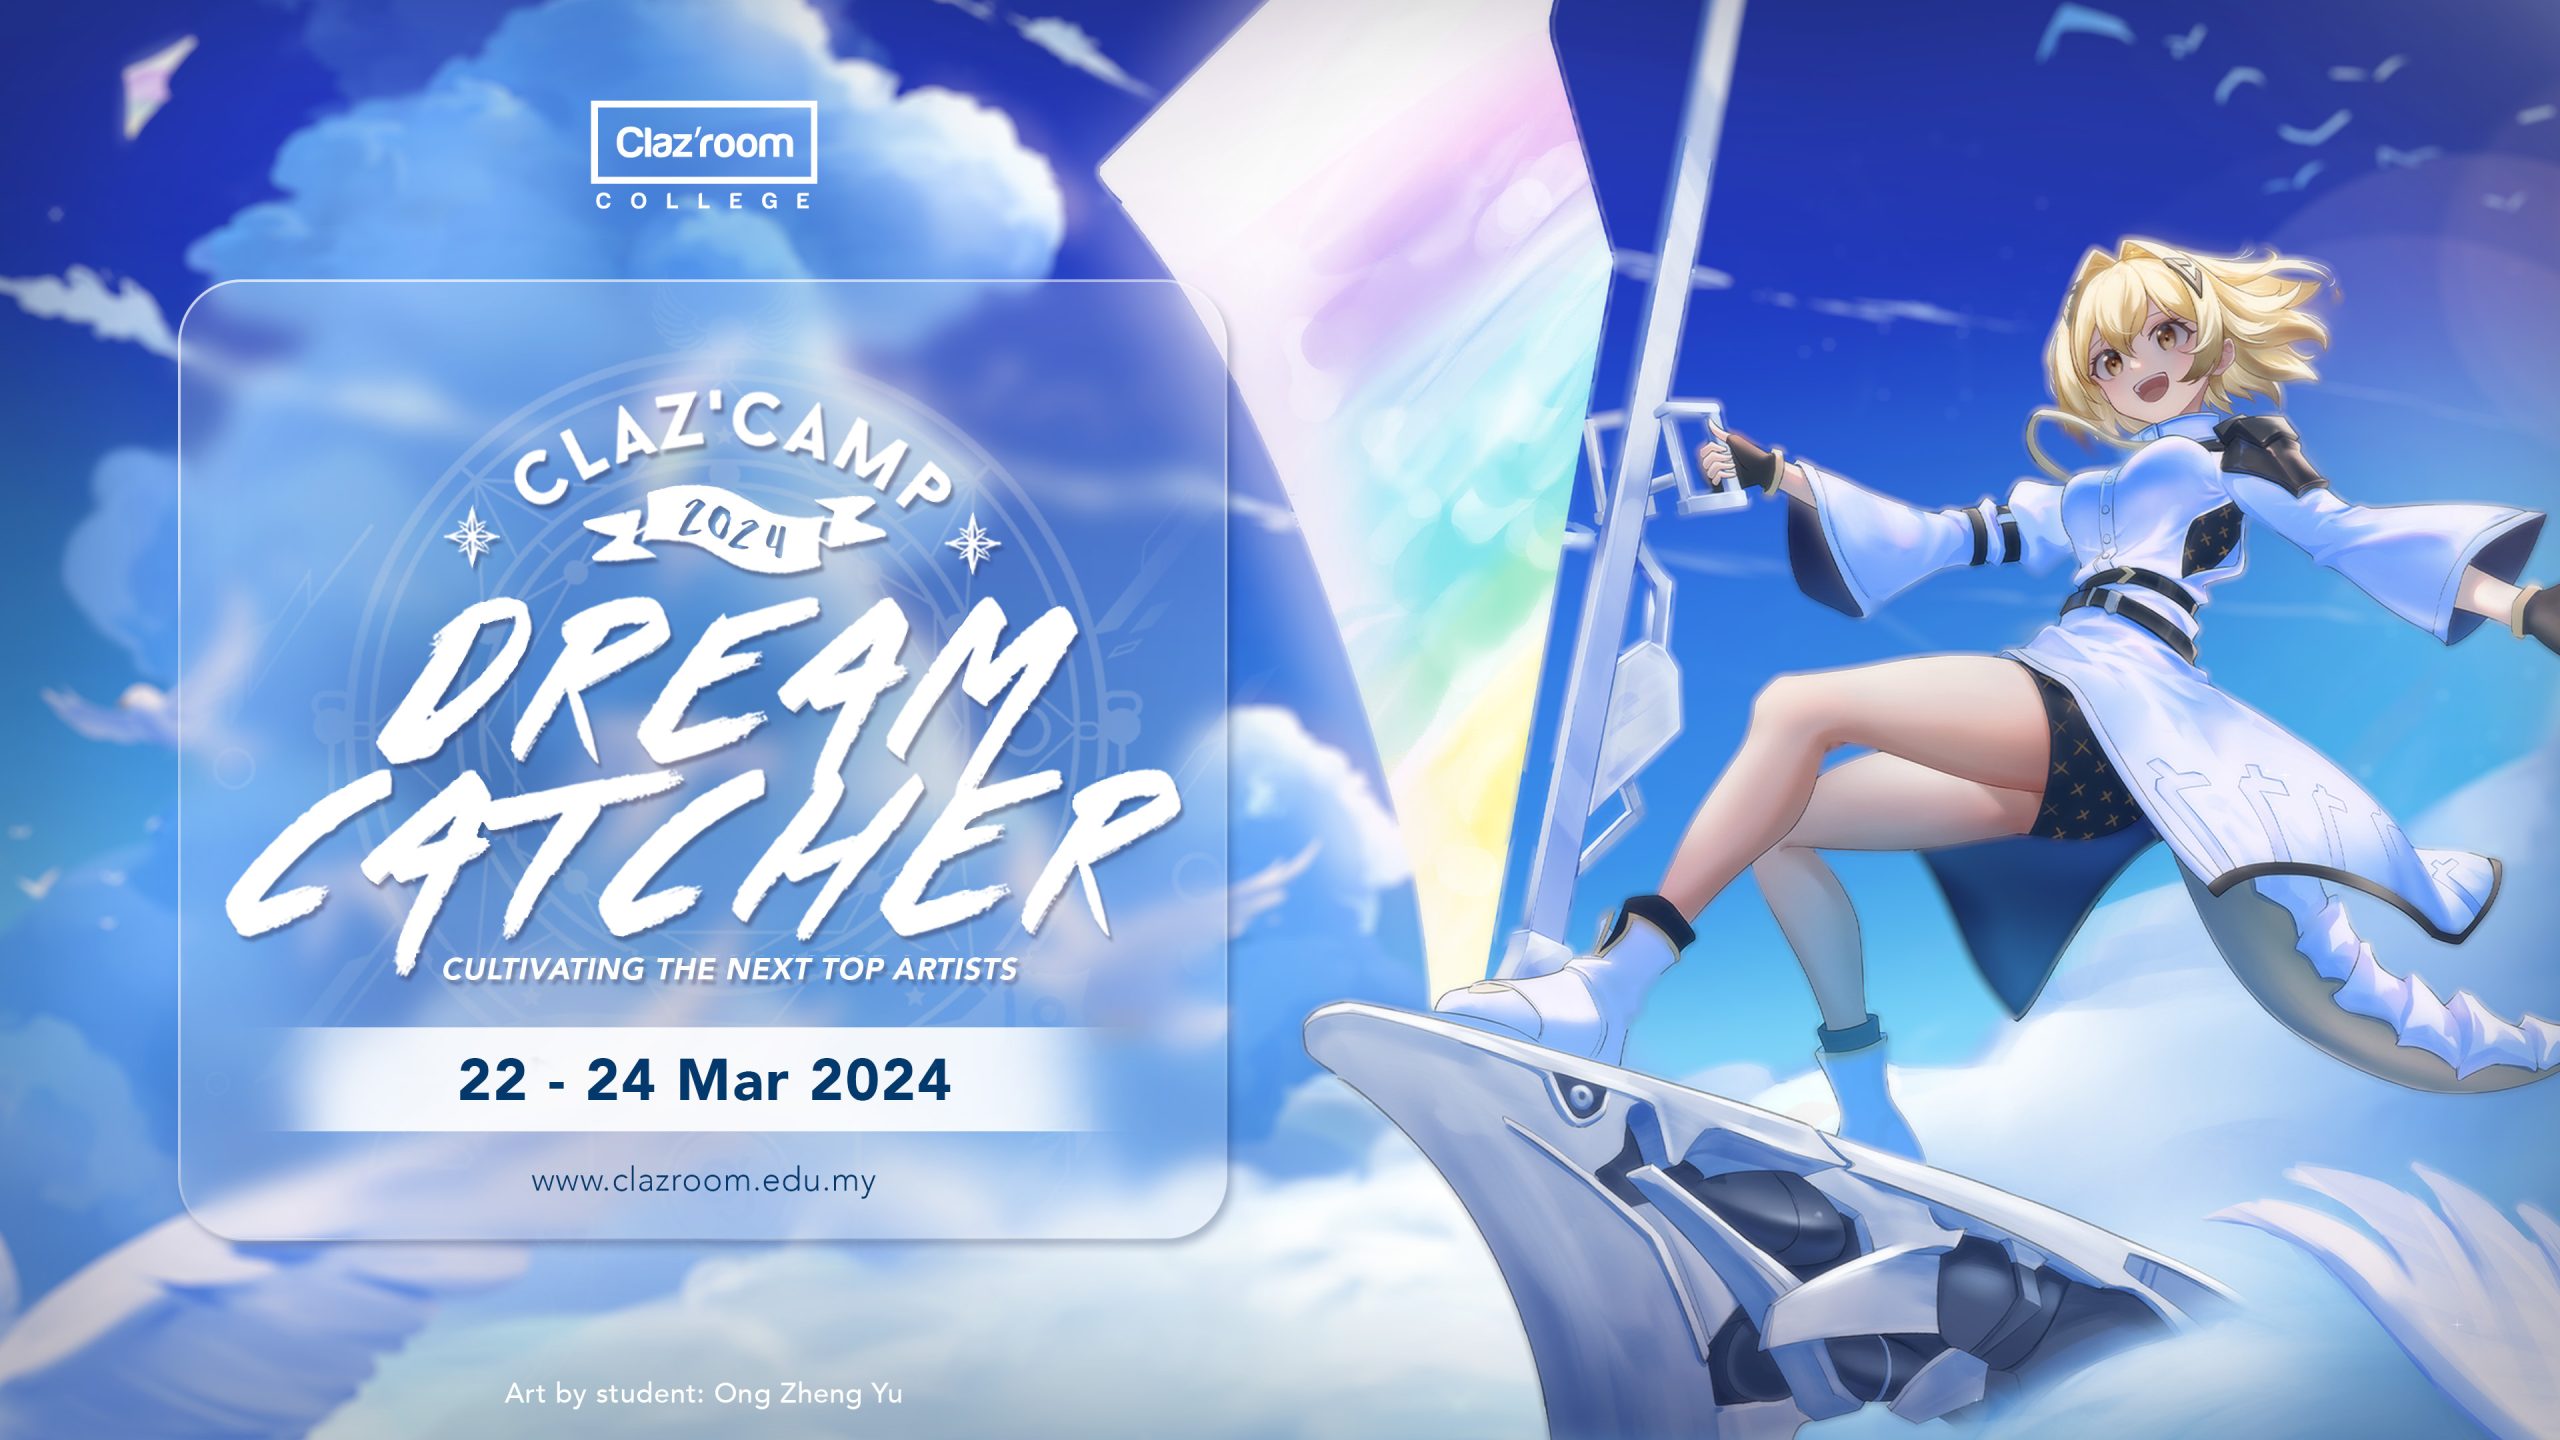 clazroom dreamcatcher march 2024